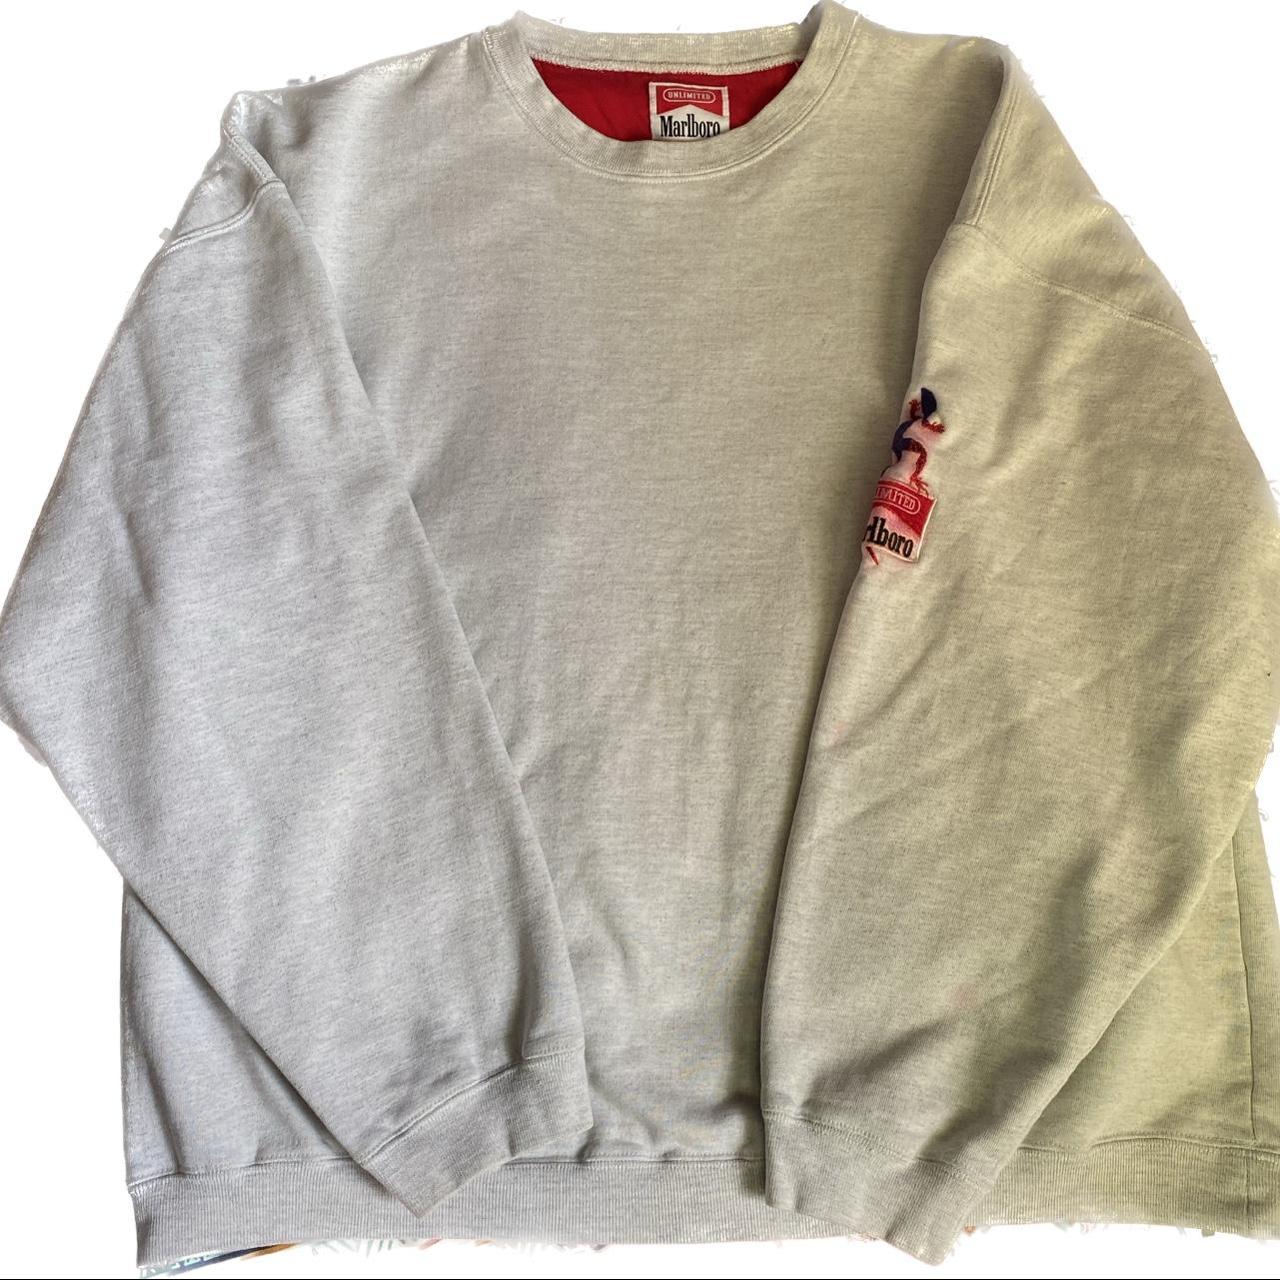 1990s Marlboro unlimited sweatshirt size XL The... - Depop